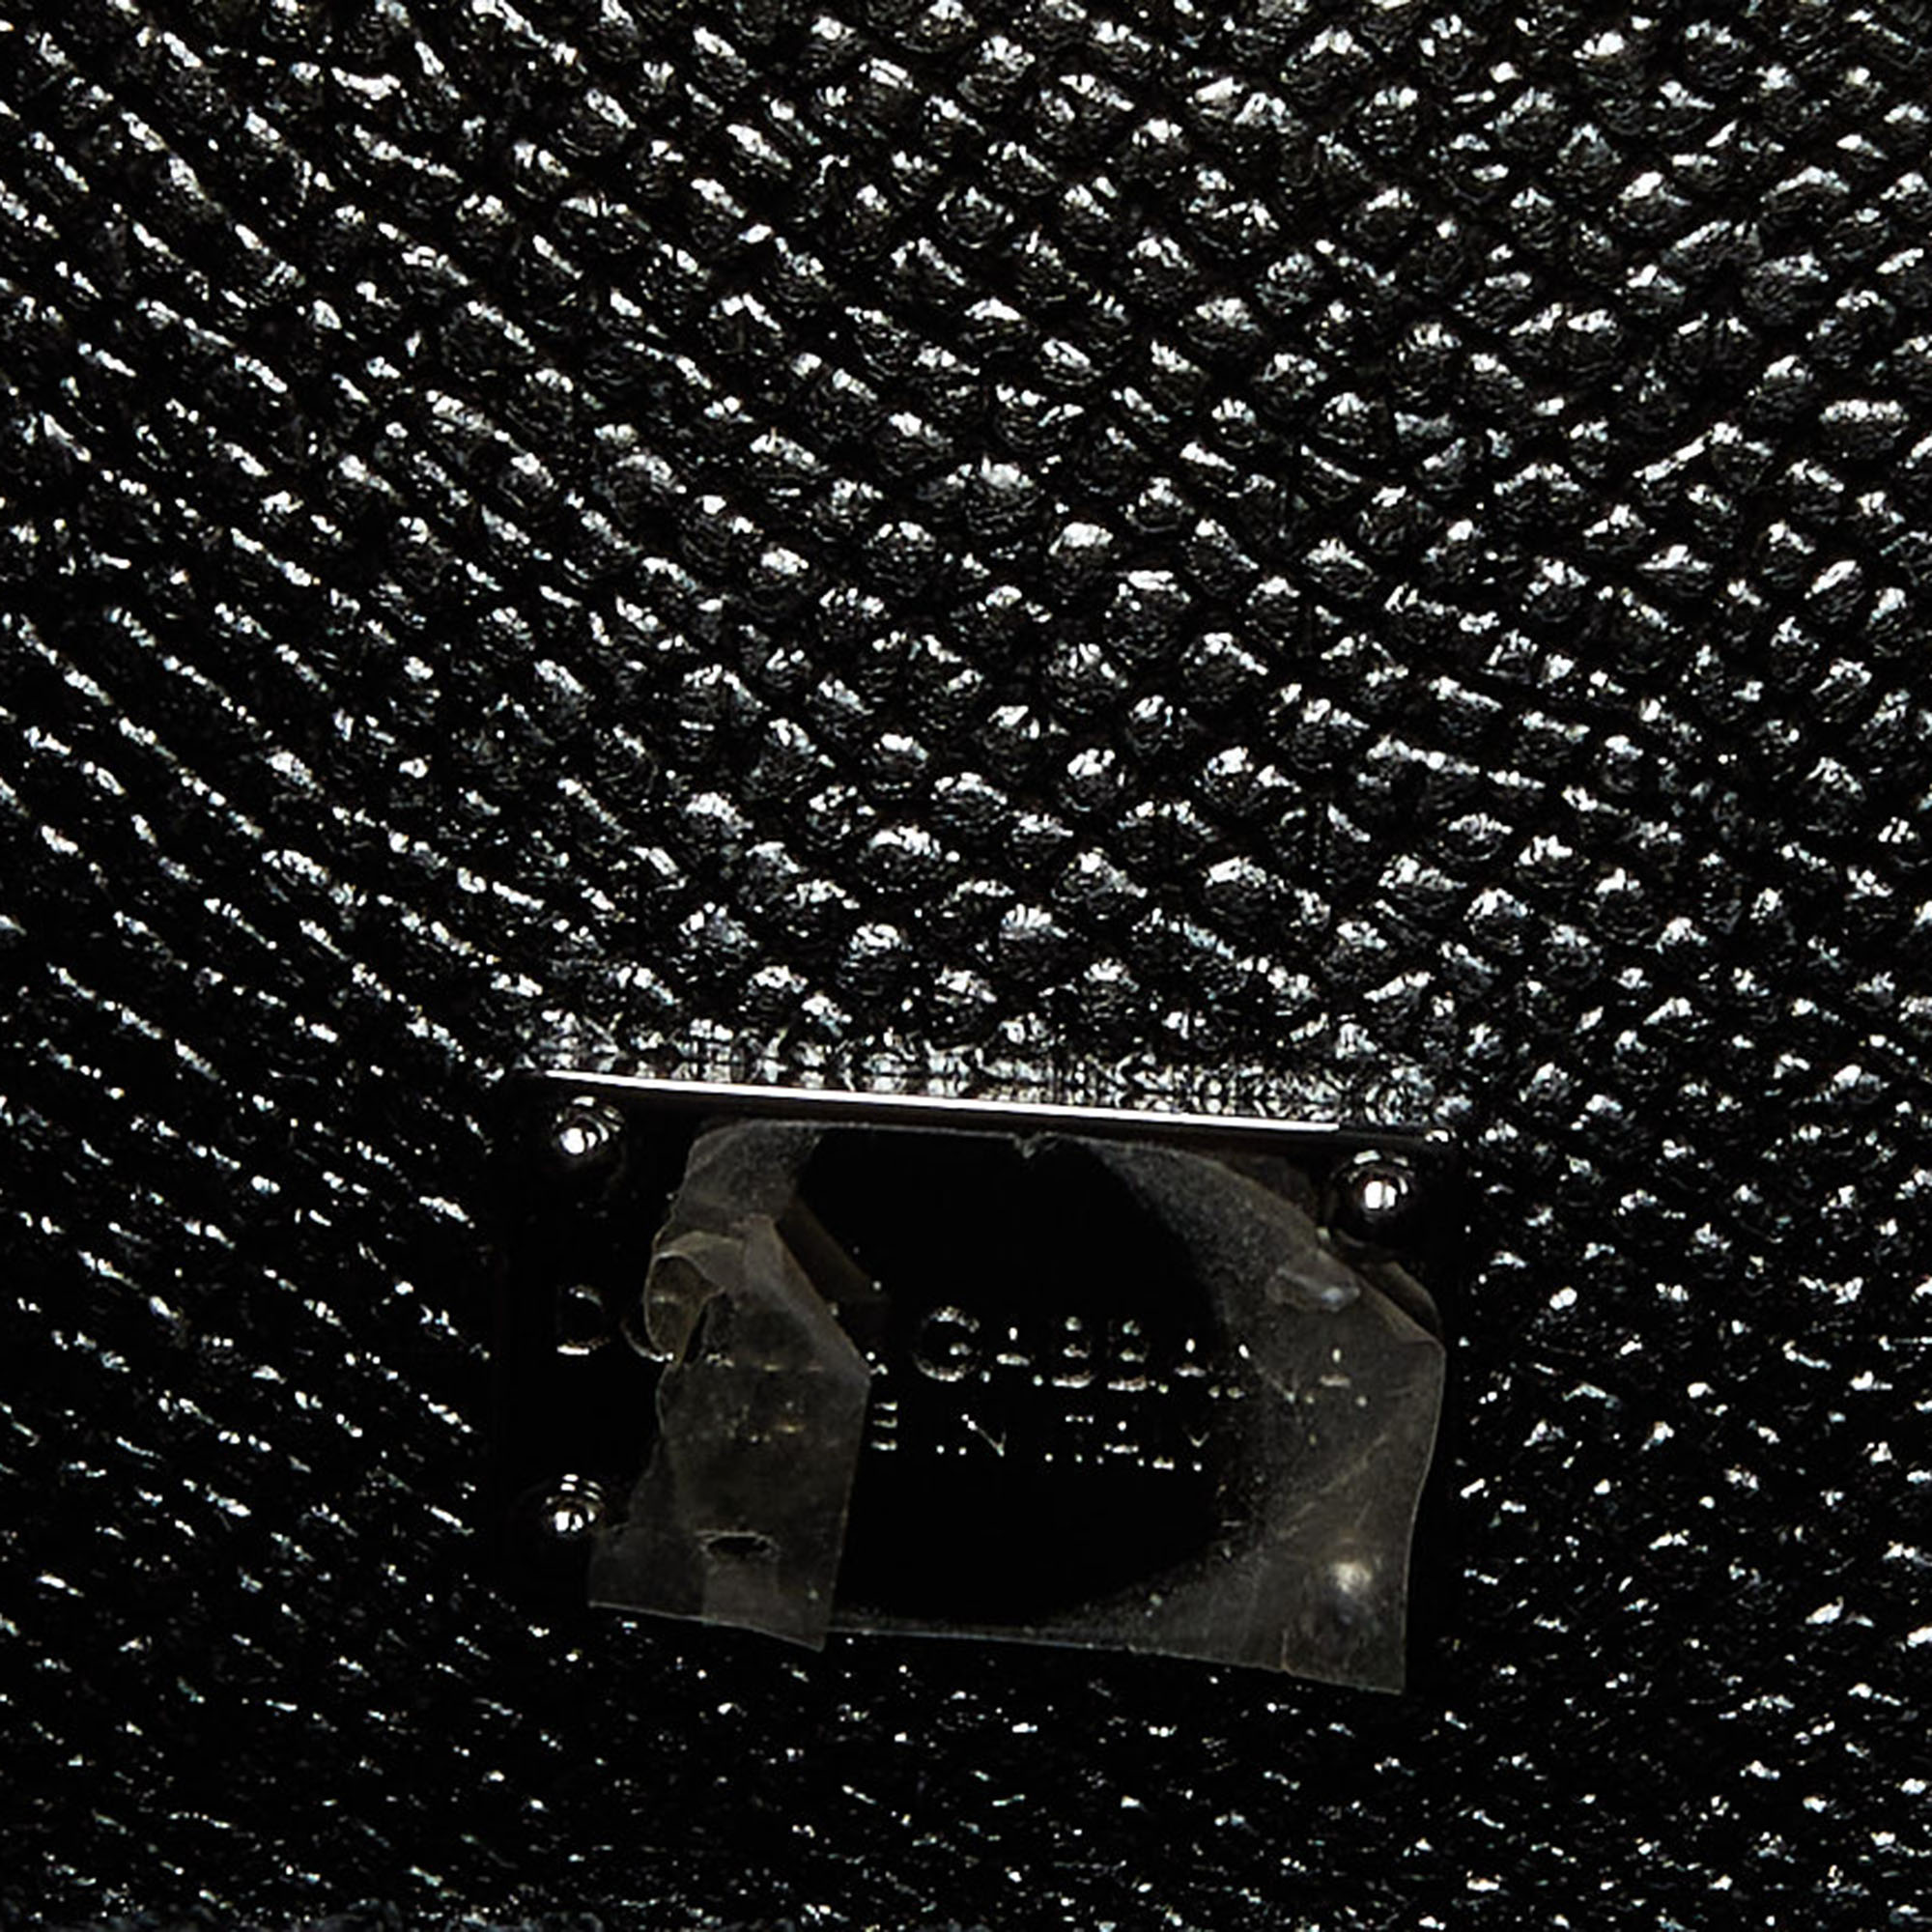 Dolce & Gabbana Metallic Leather Medium Miss Sicily Top Handle Bag